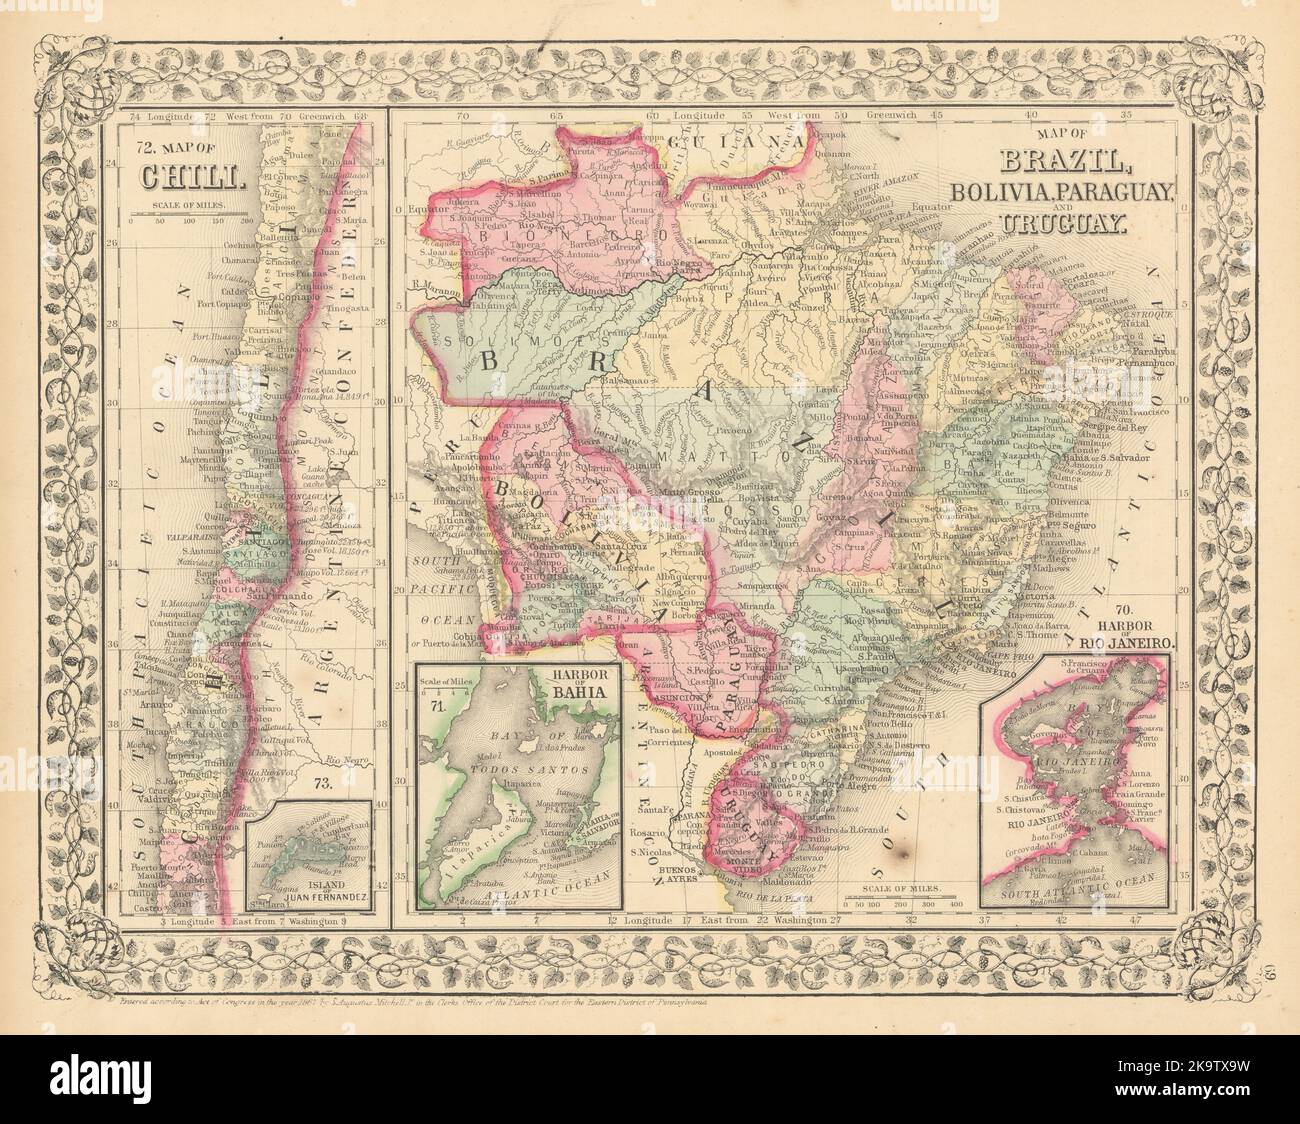 Brazil Bolivia Paraguay Uruguay Chile. Rio de Janeiro & Bahia. MITCHELL 1869 map Stock Photo